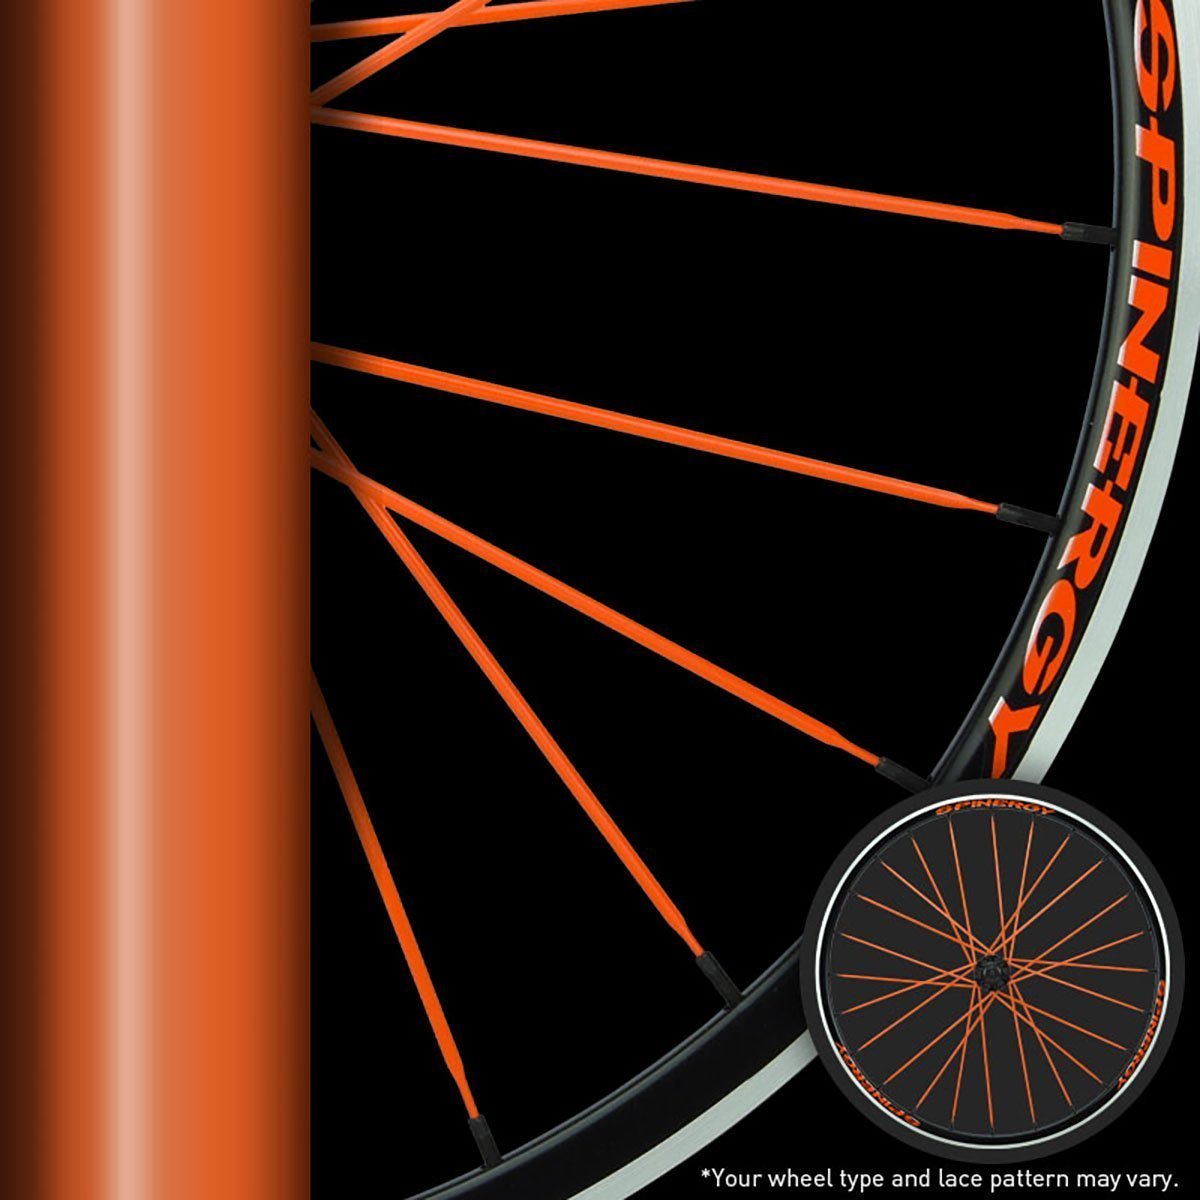 SPINERGY – GX Max 700c, Bicycle Wheel Set – Gravel, MTB - 15MM Front Hub